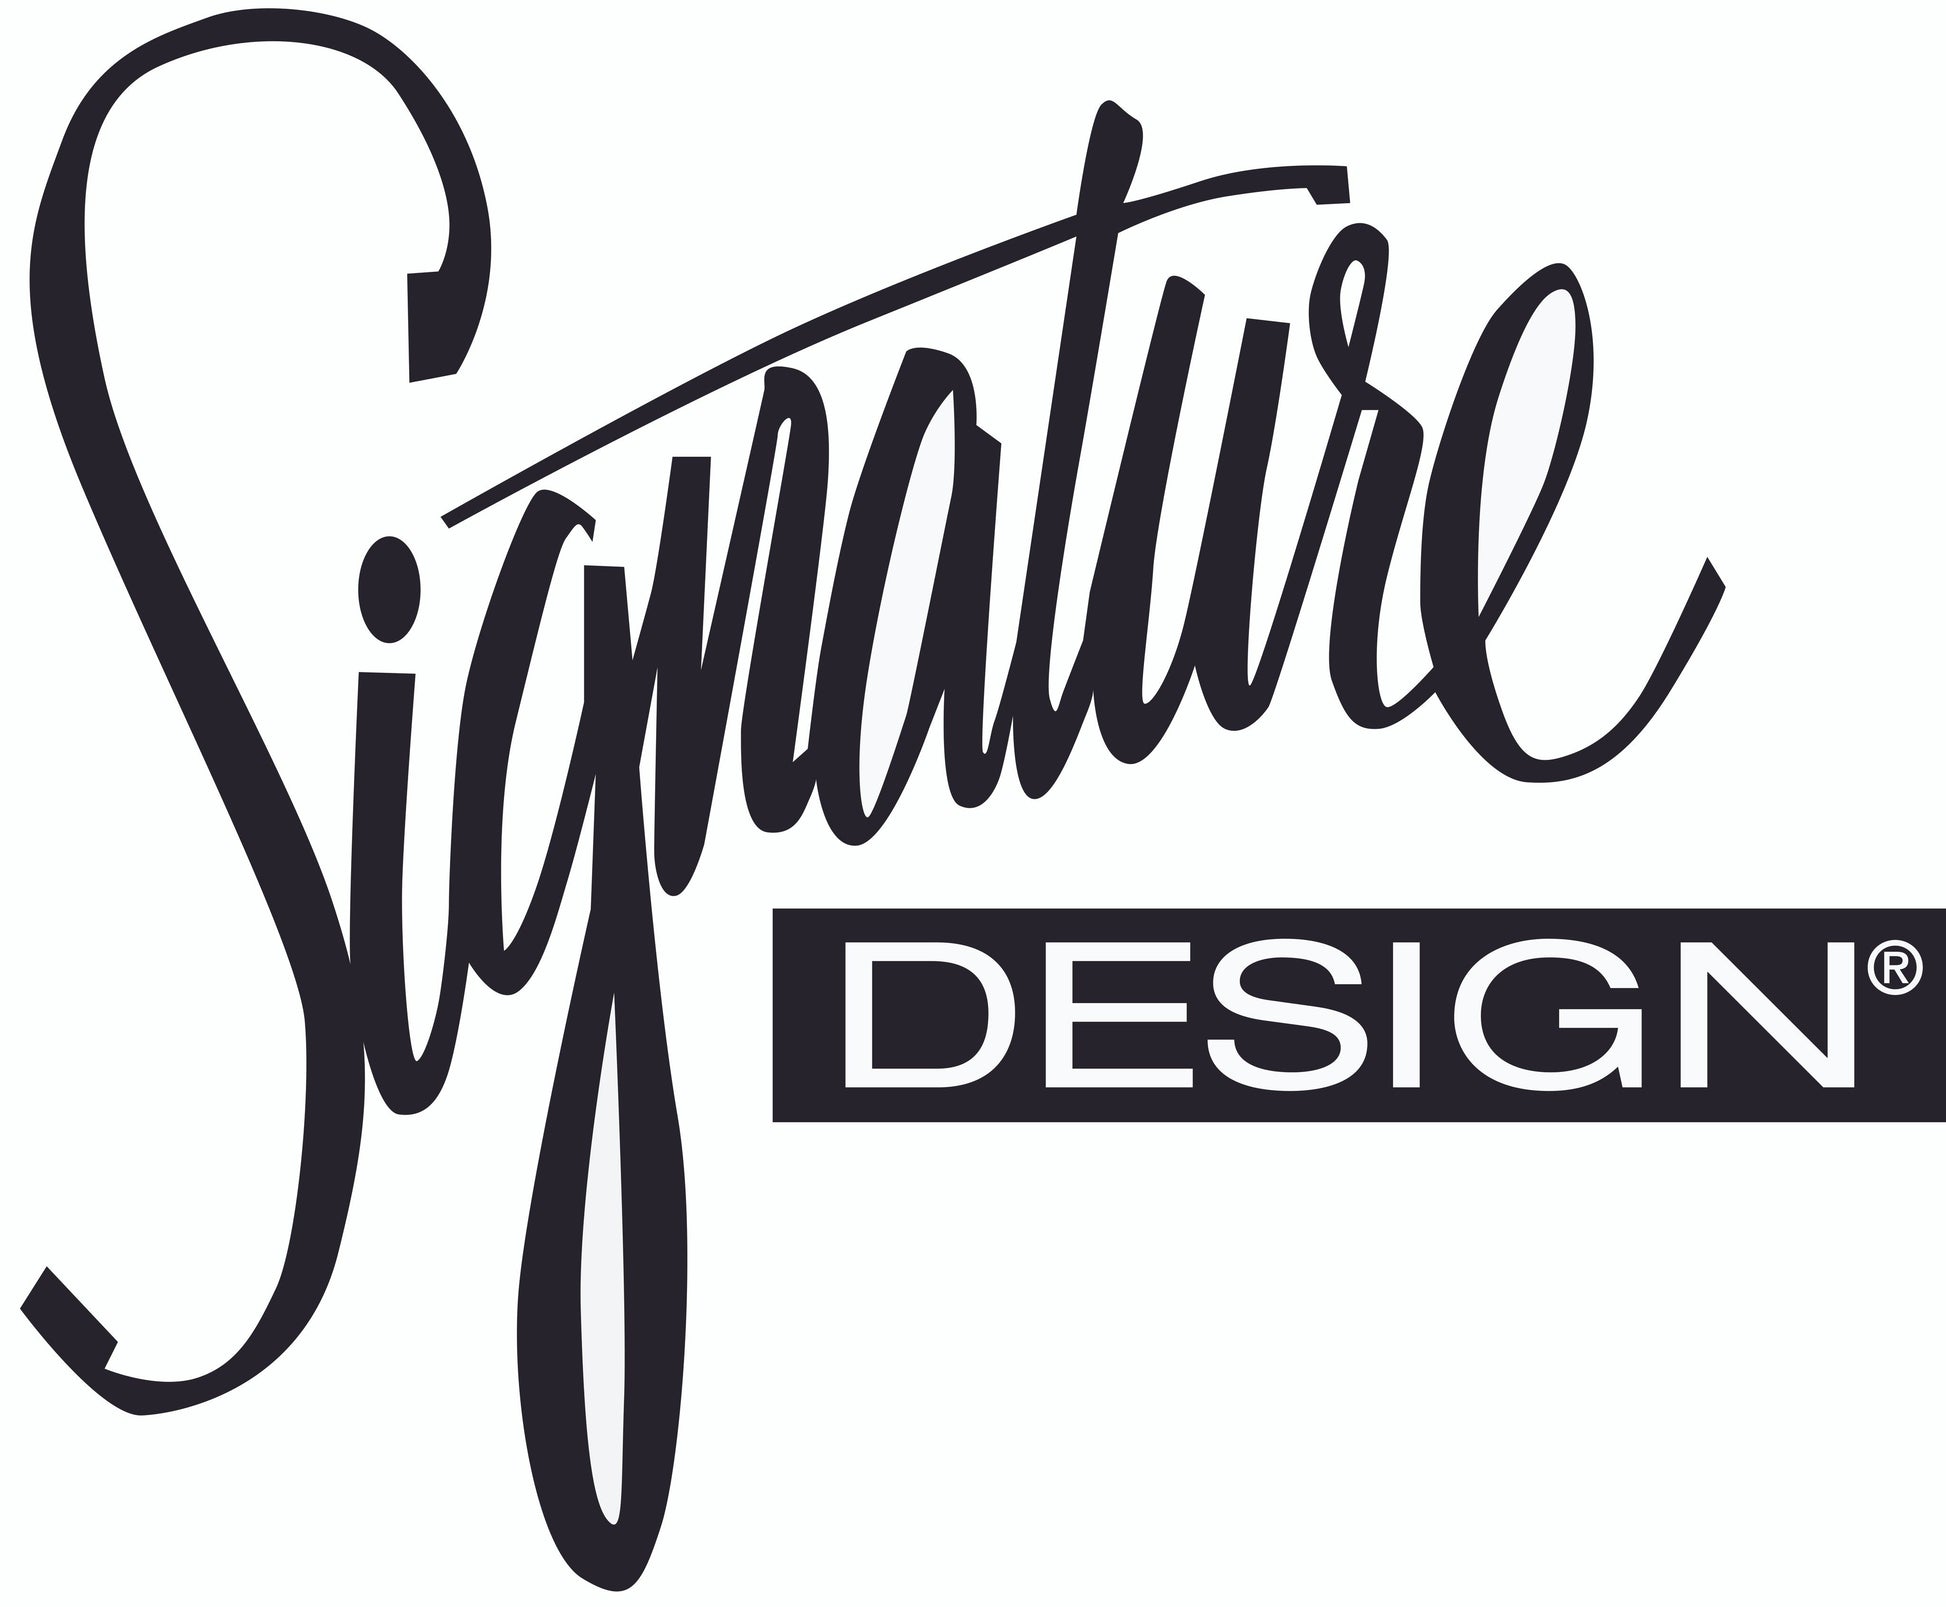 Emilia 3-Piece Sectional Sofa Signature Design by Ashley®